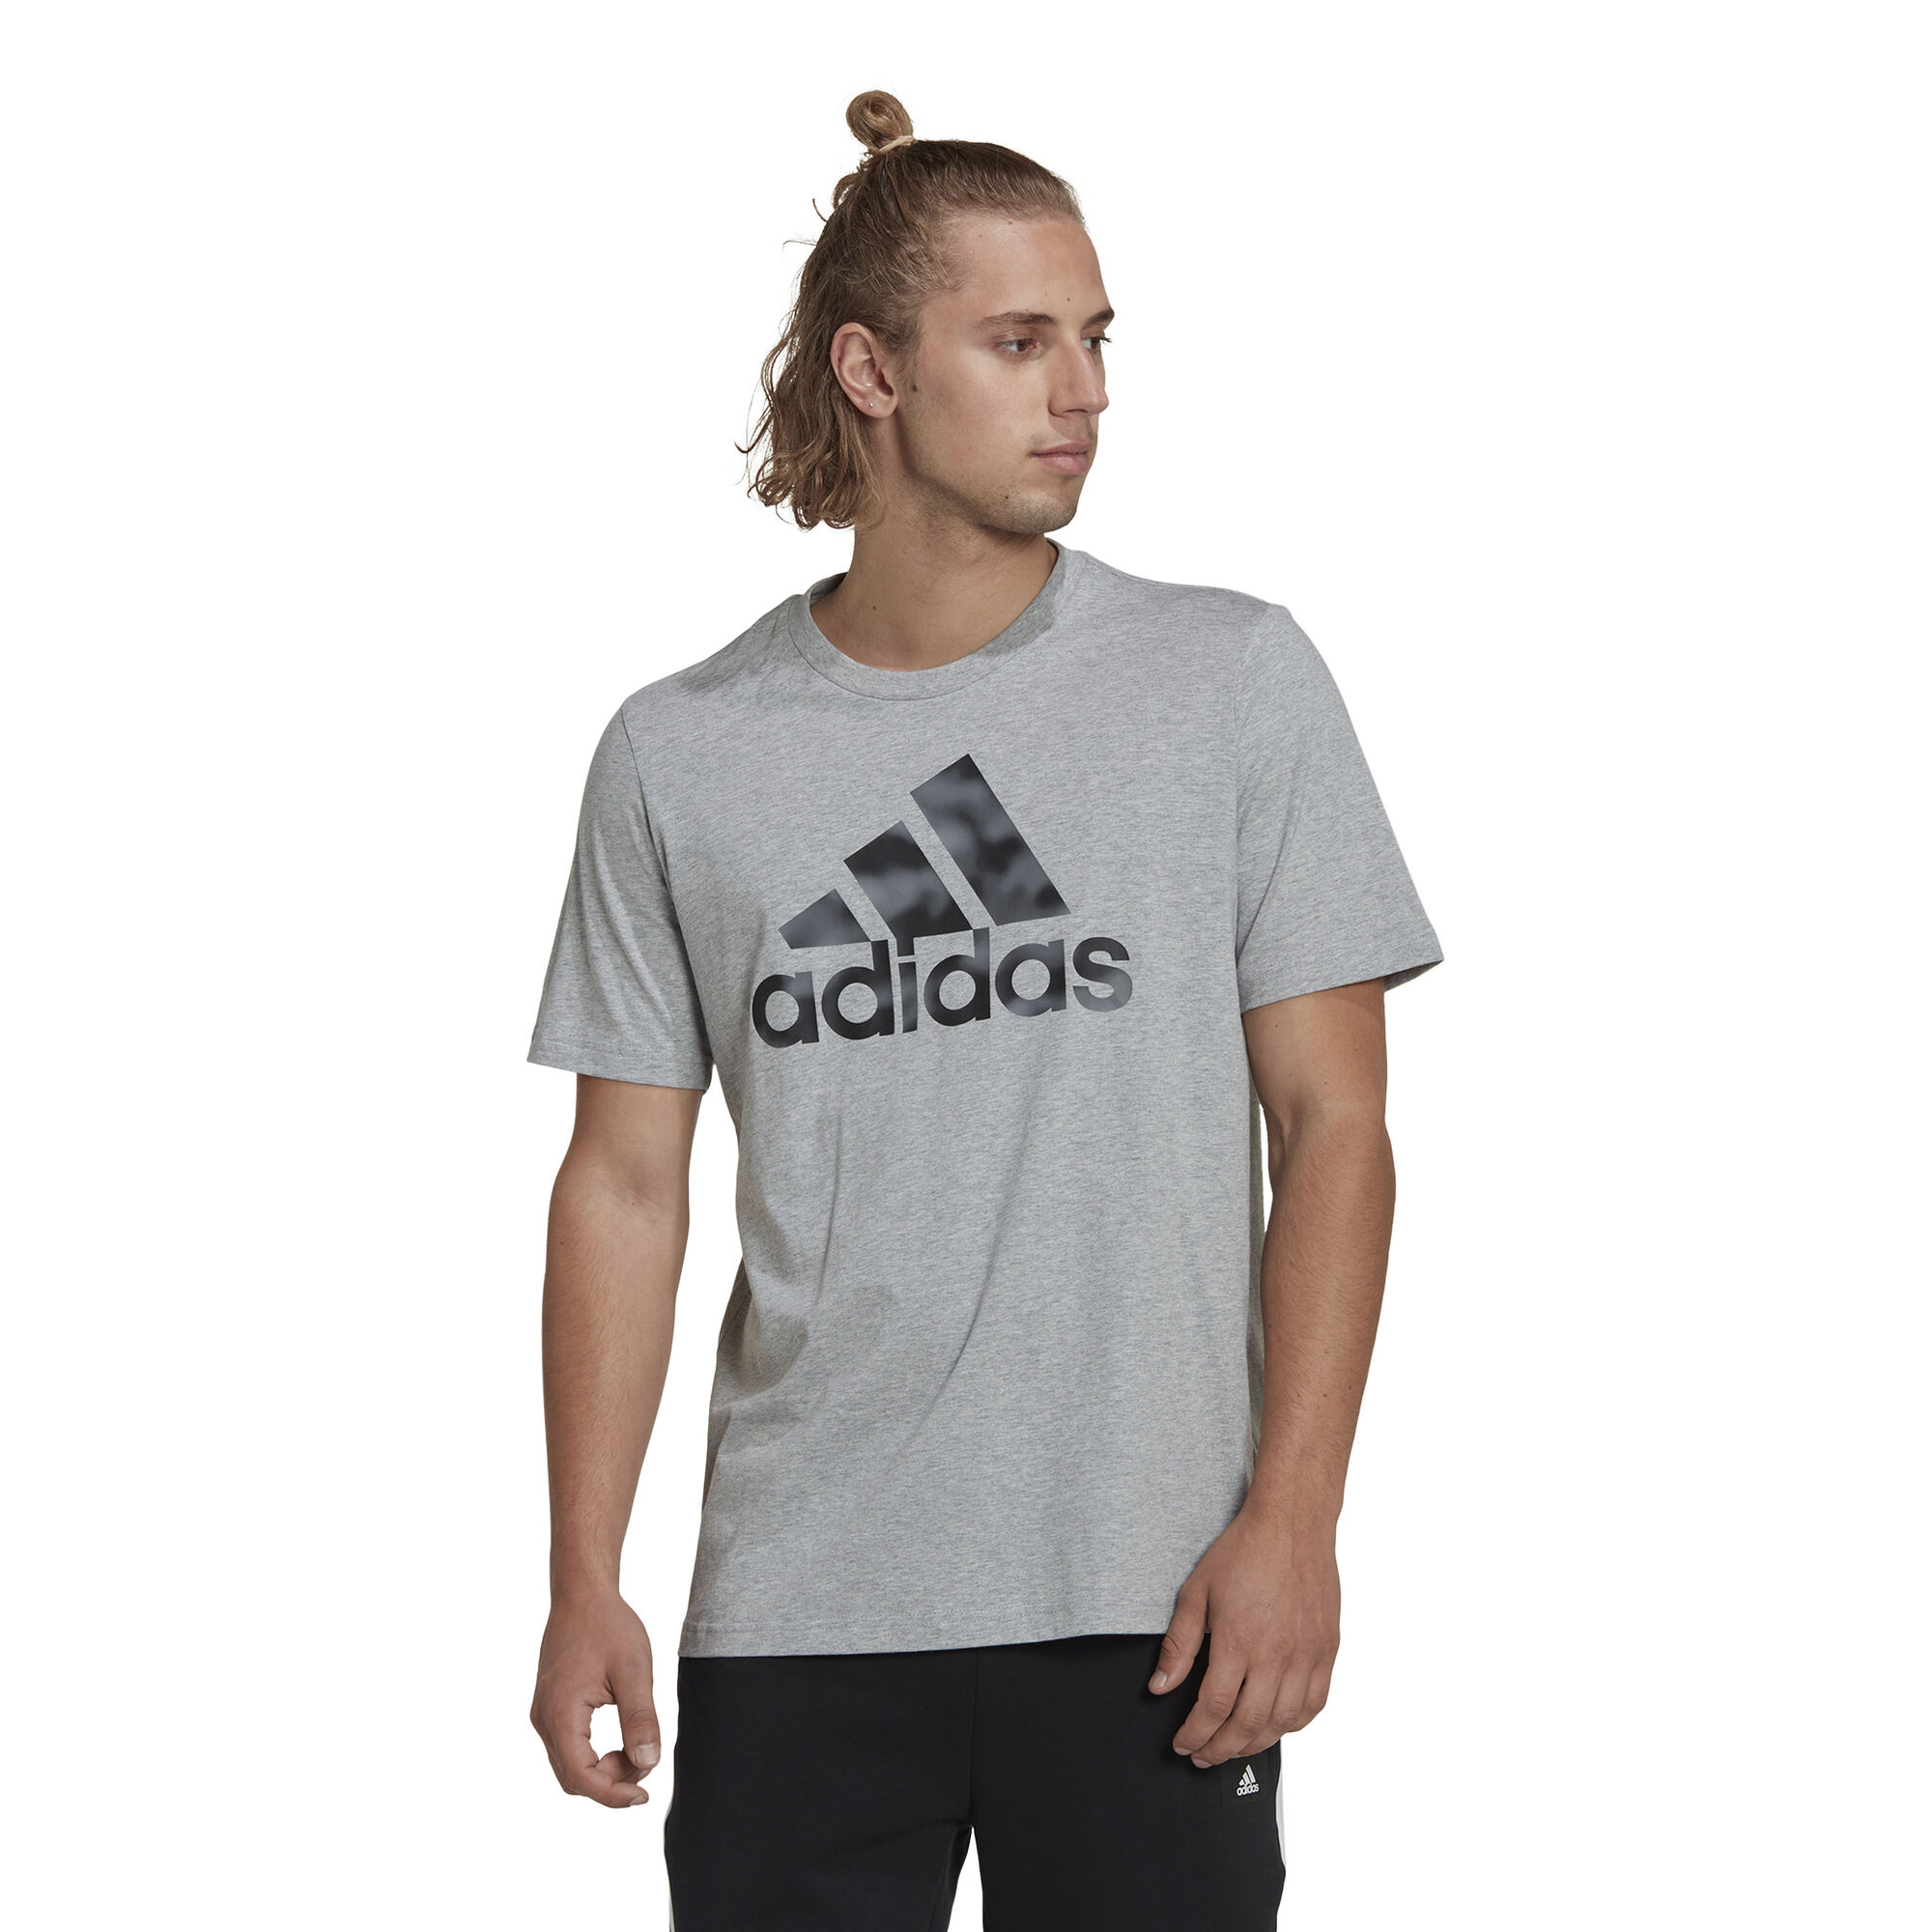 adidas Camo Camiseta De Manga Corta Hombres - Gris compra | Tennis-Point